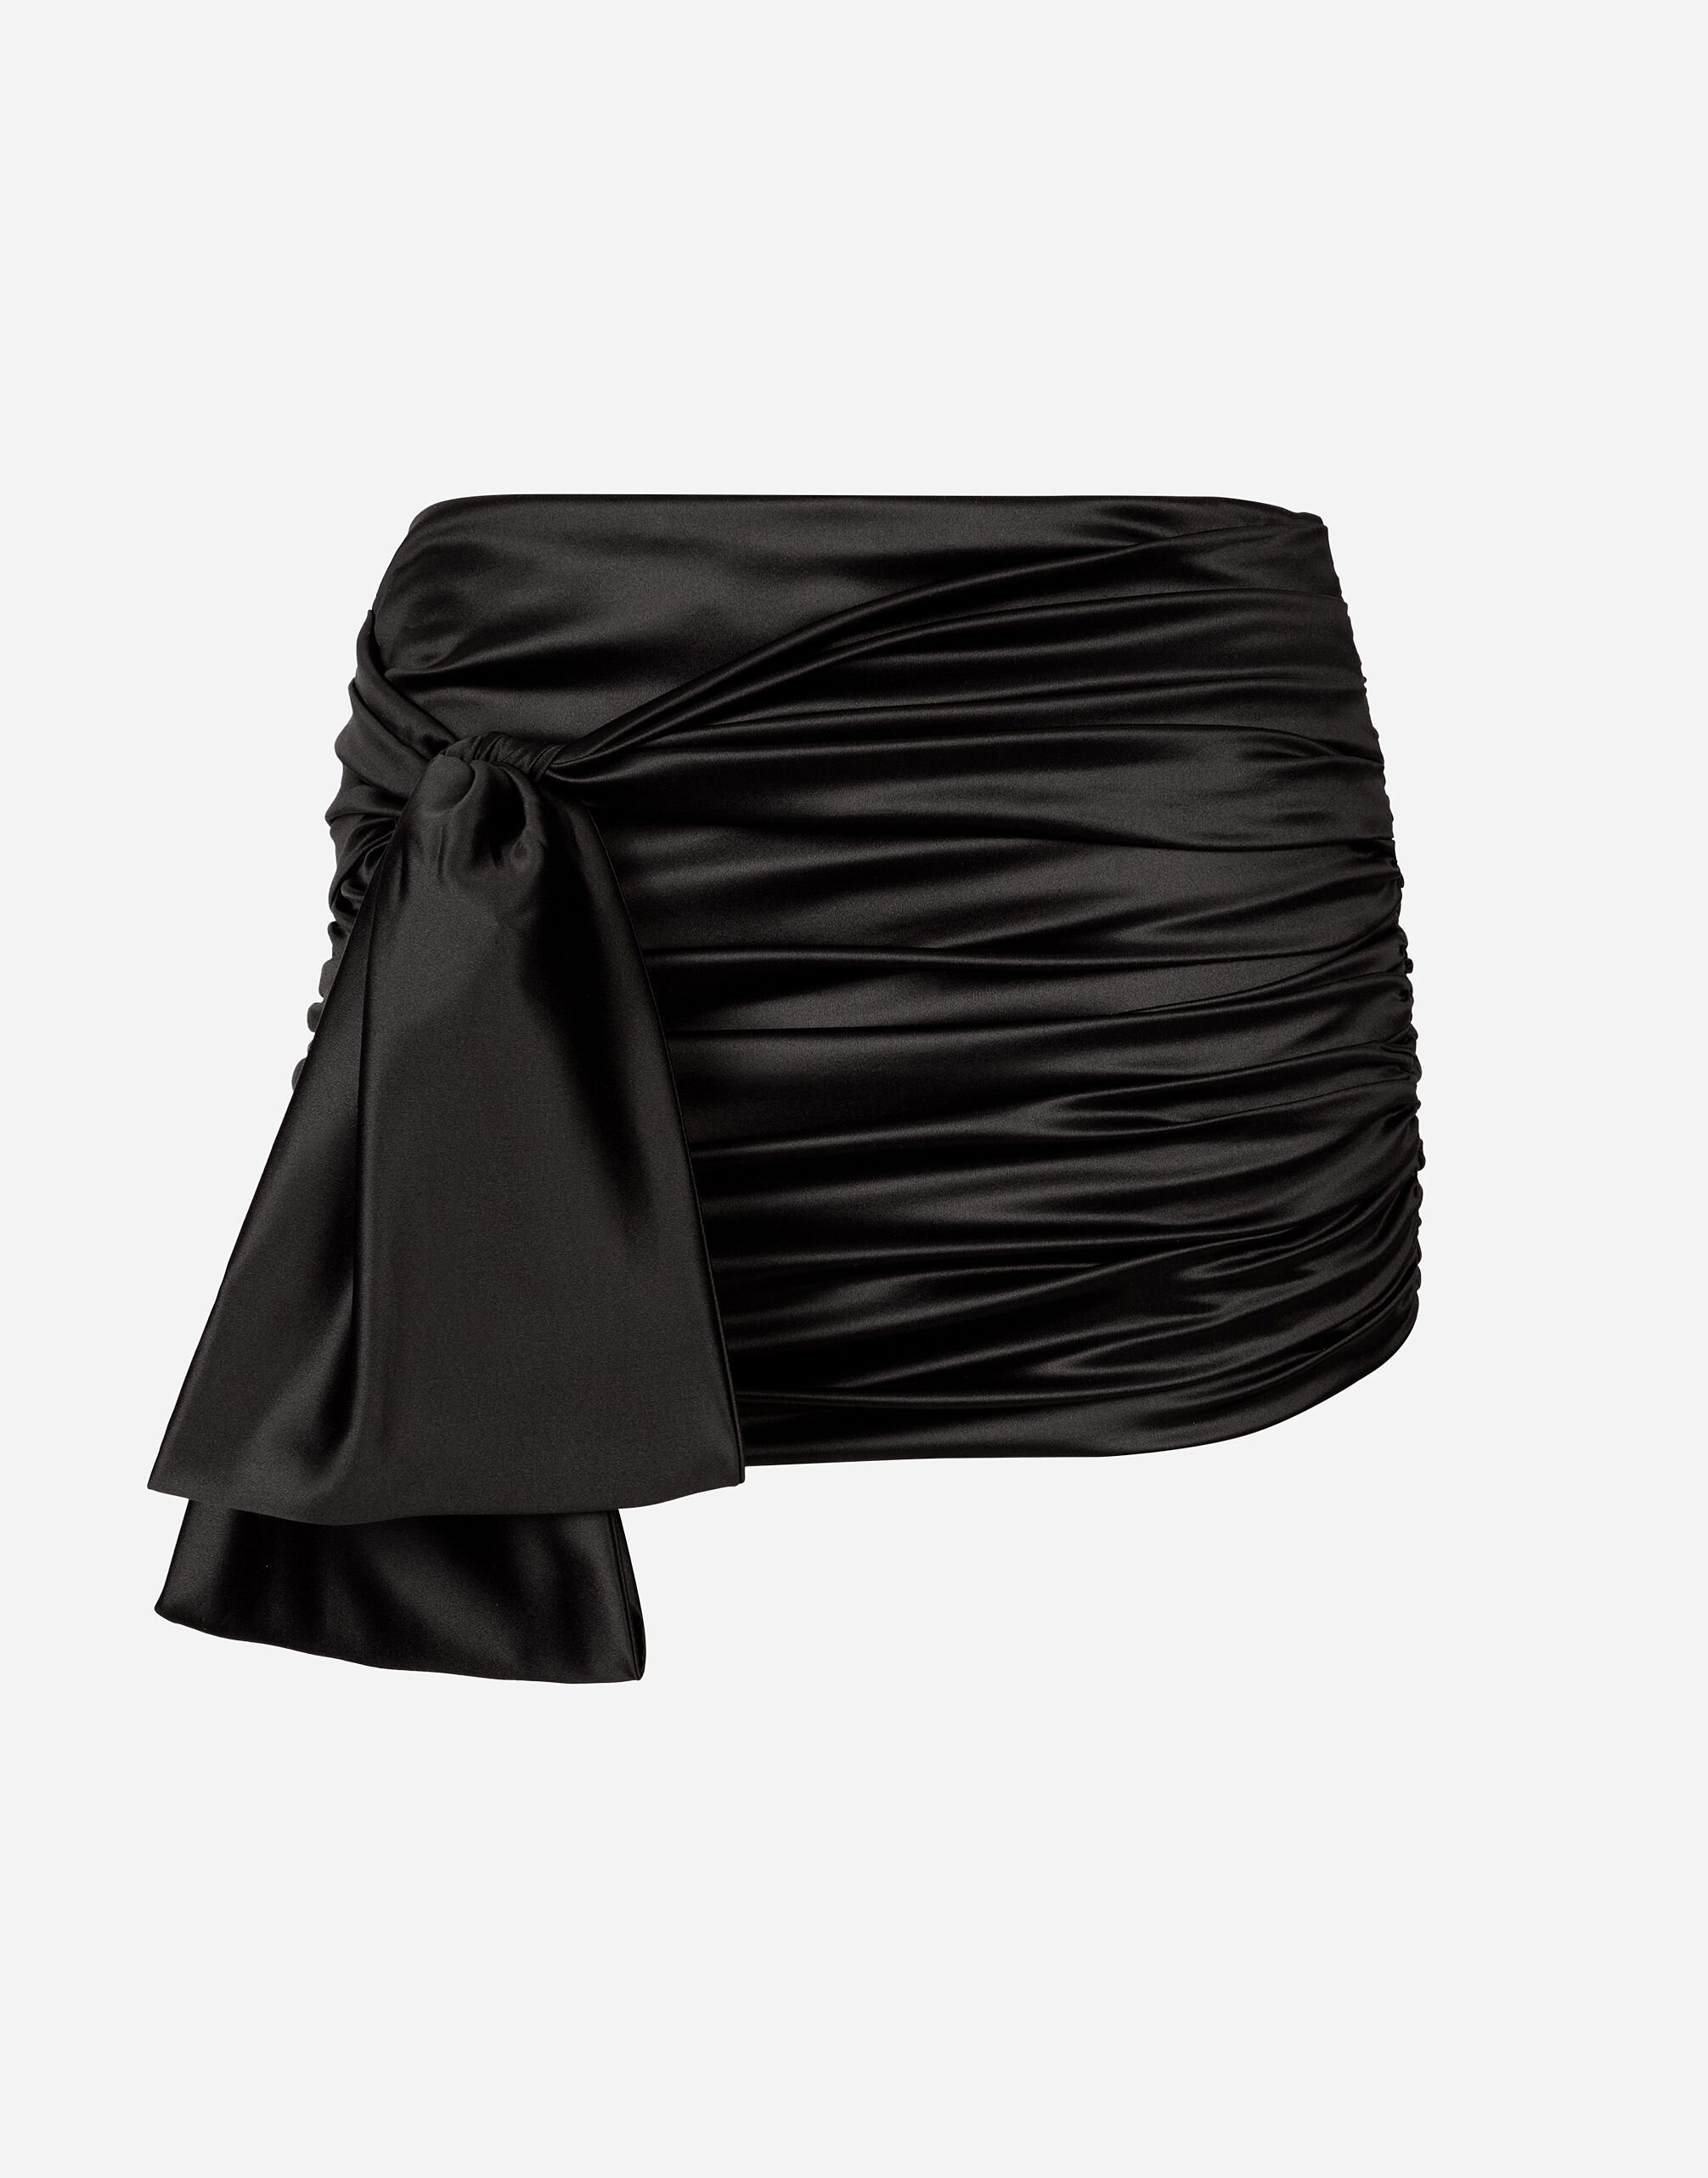 Dolce&Gabbana Short draped satin skirt with side bow Black F6DKITFU1AT